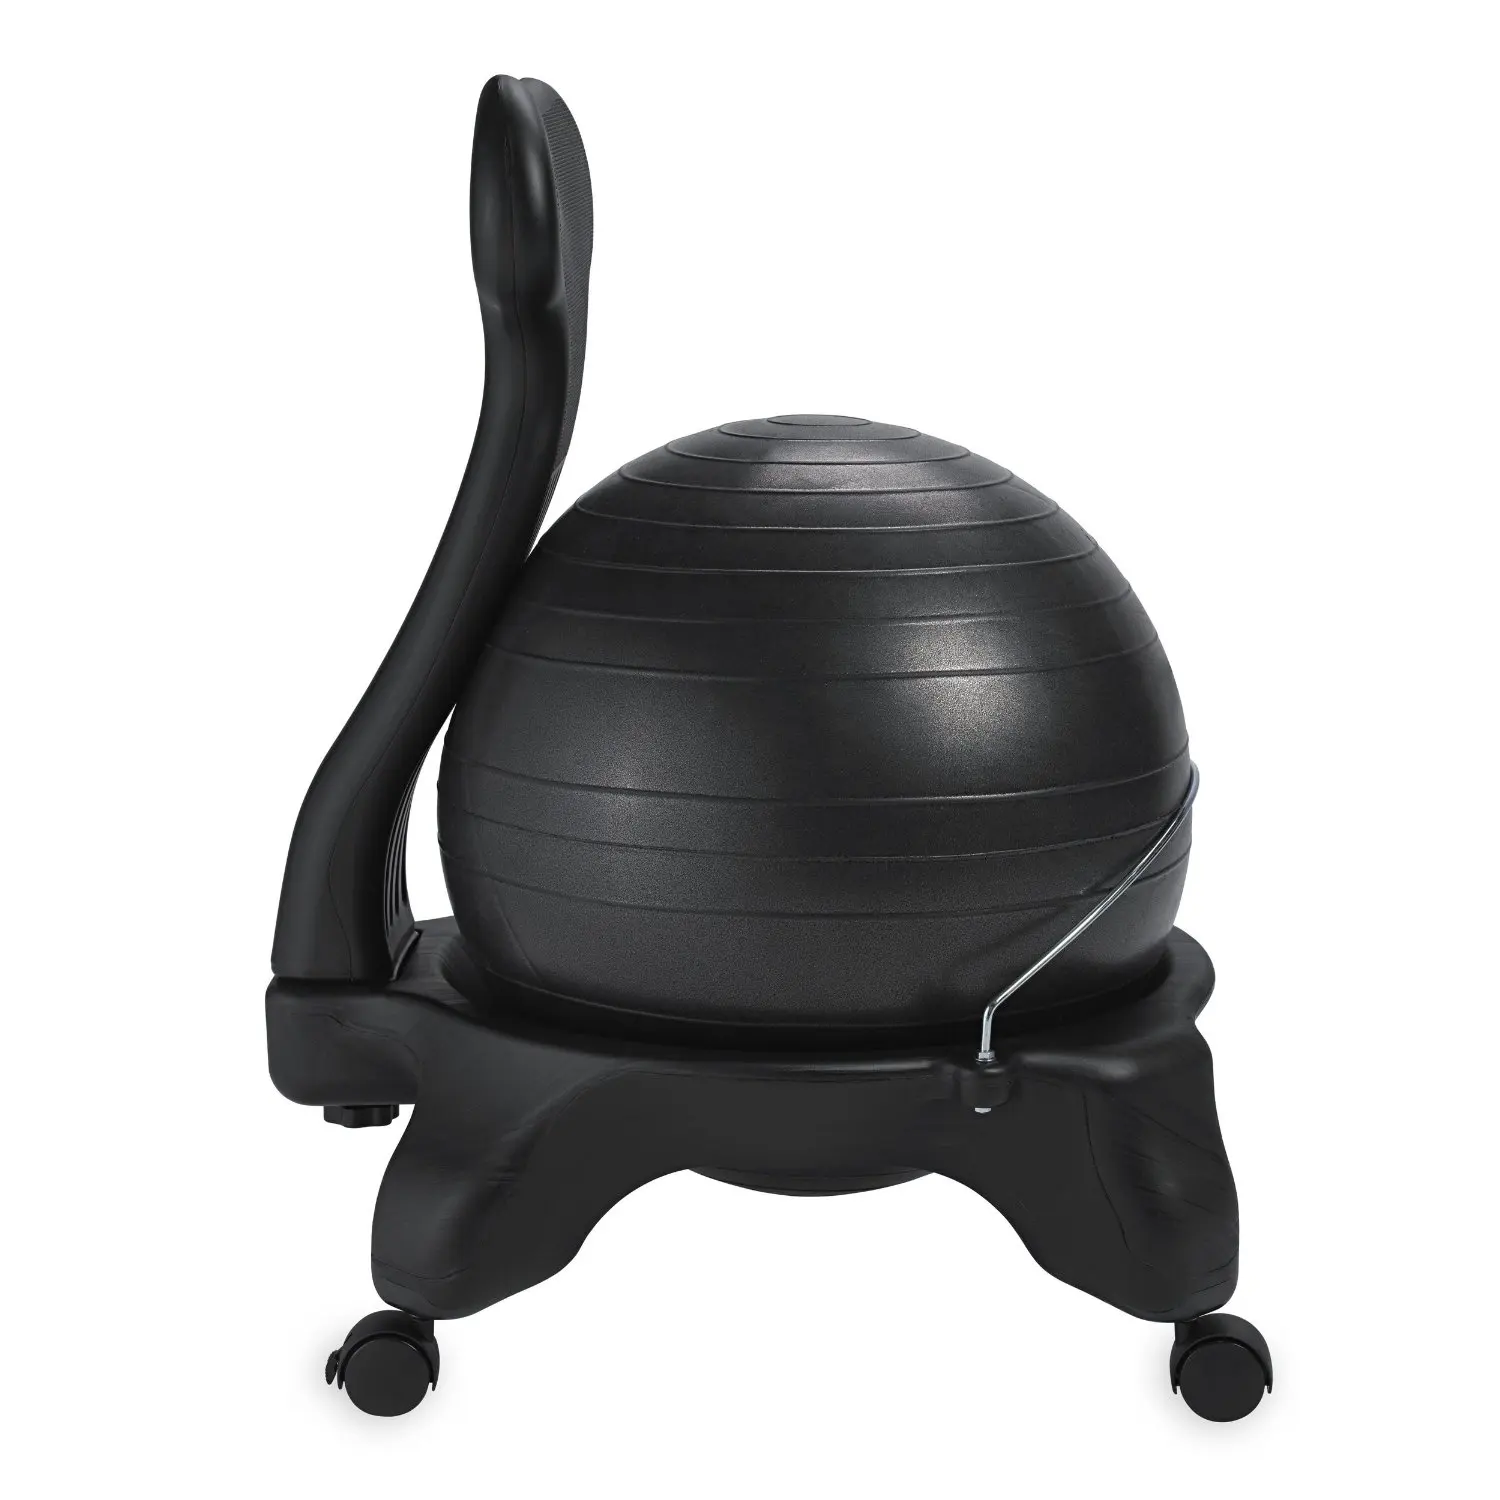 staples yoga ball chair